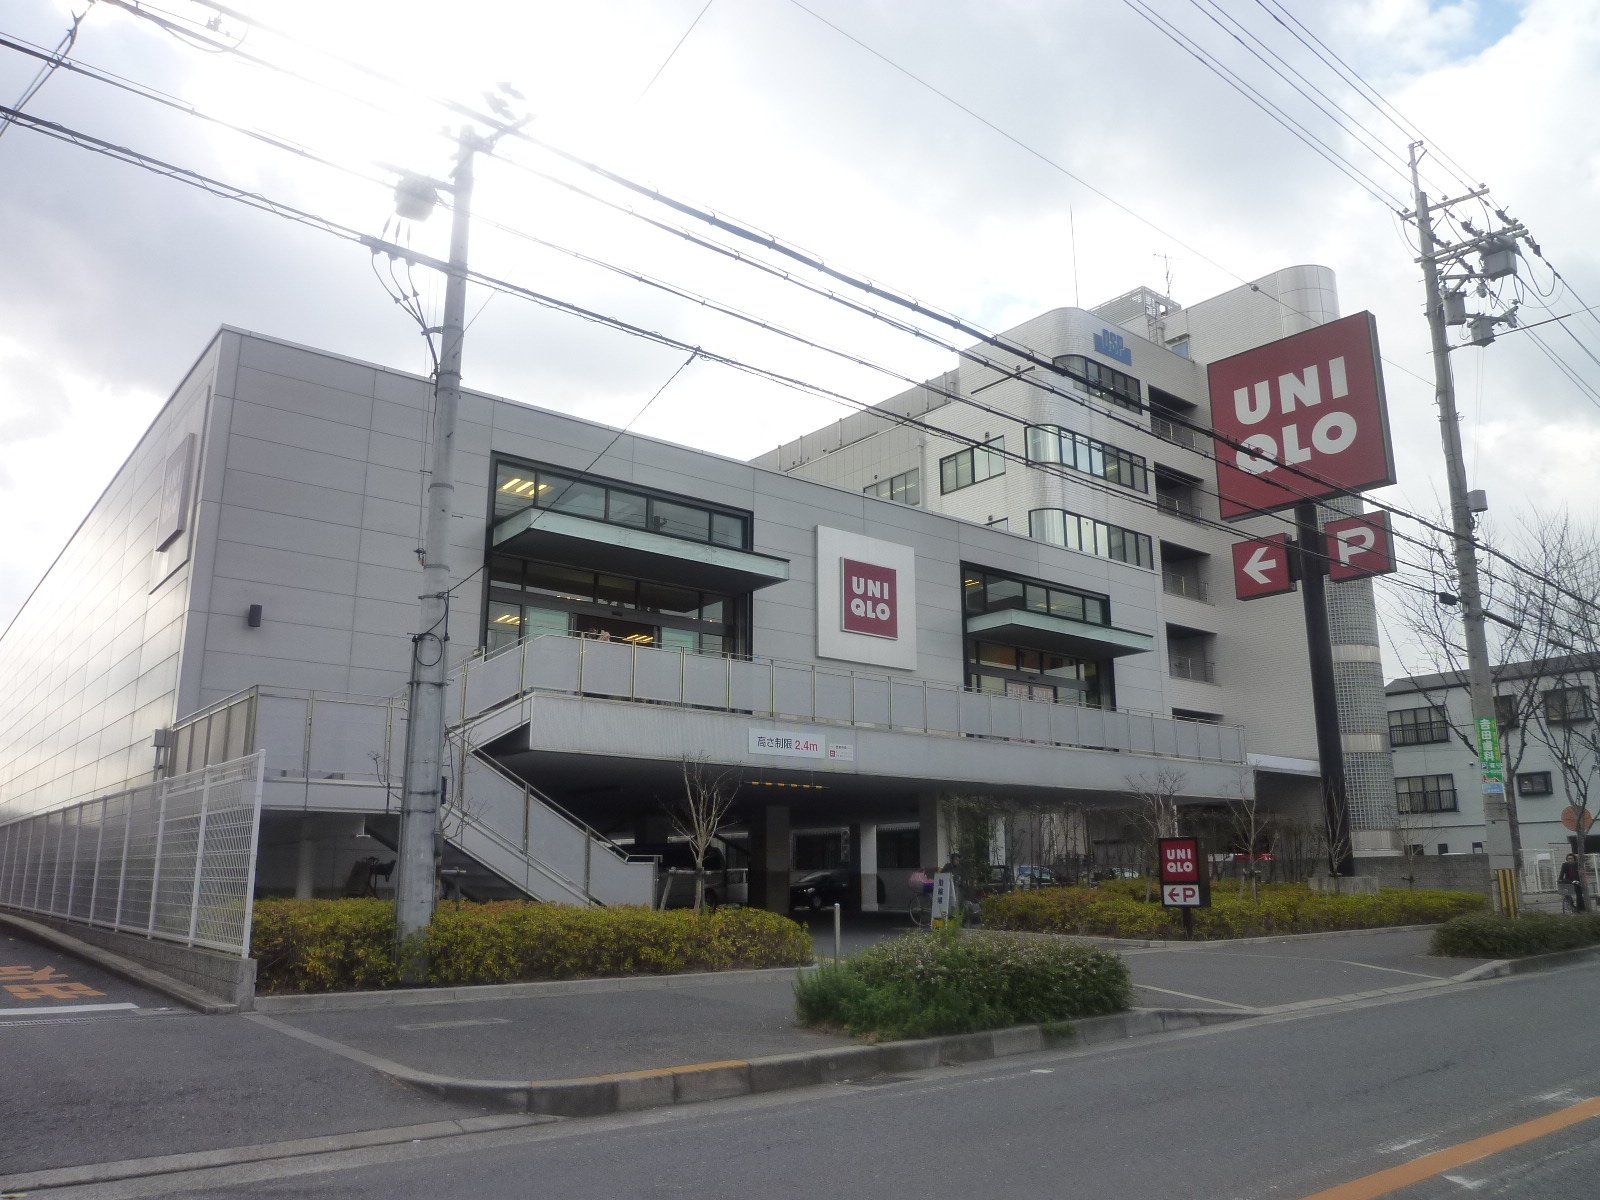 Shopping centre. 609m to UNIQLO Yao Aoyama (shopping center)